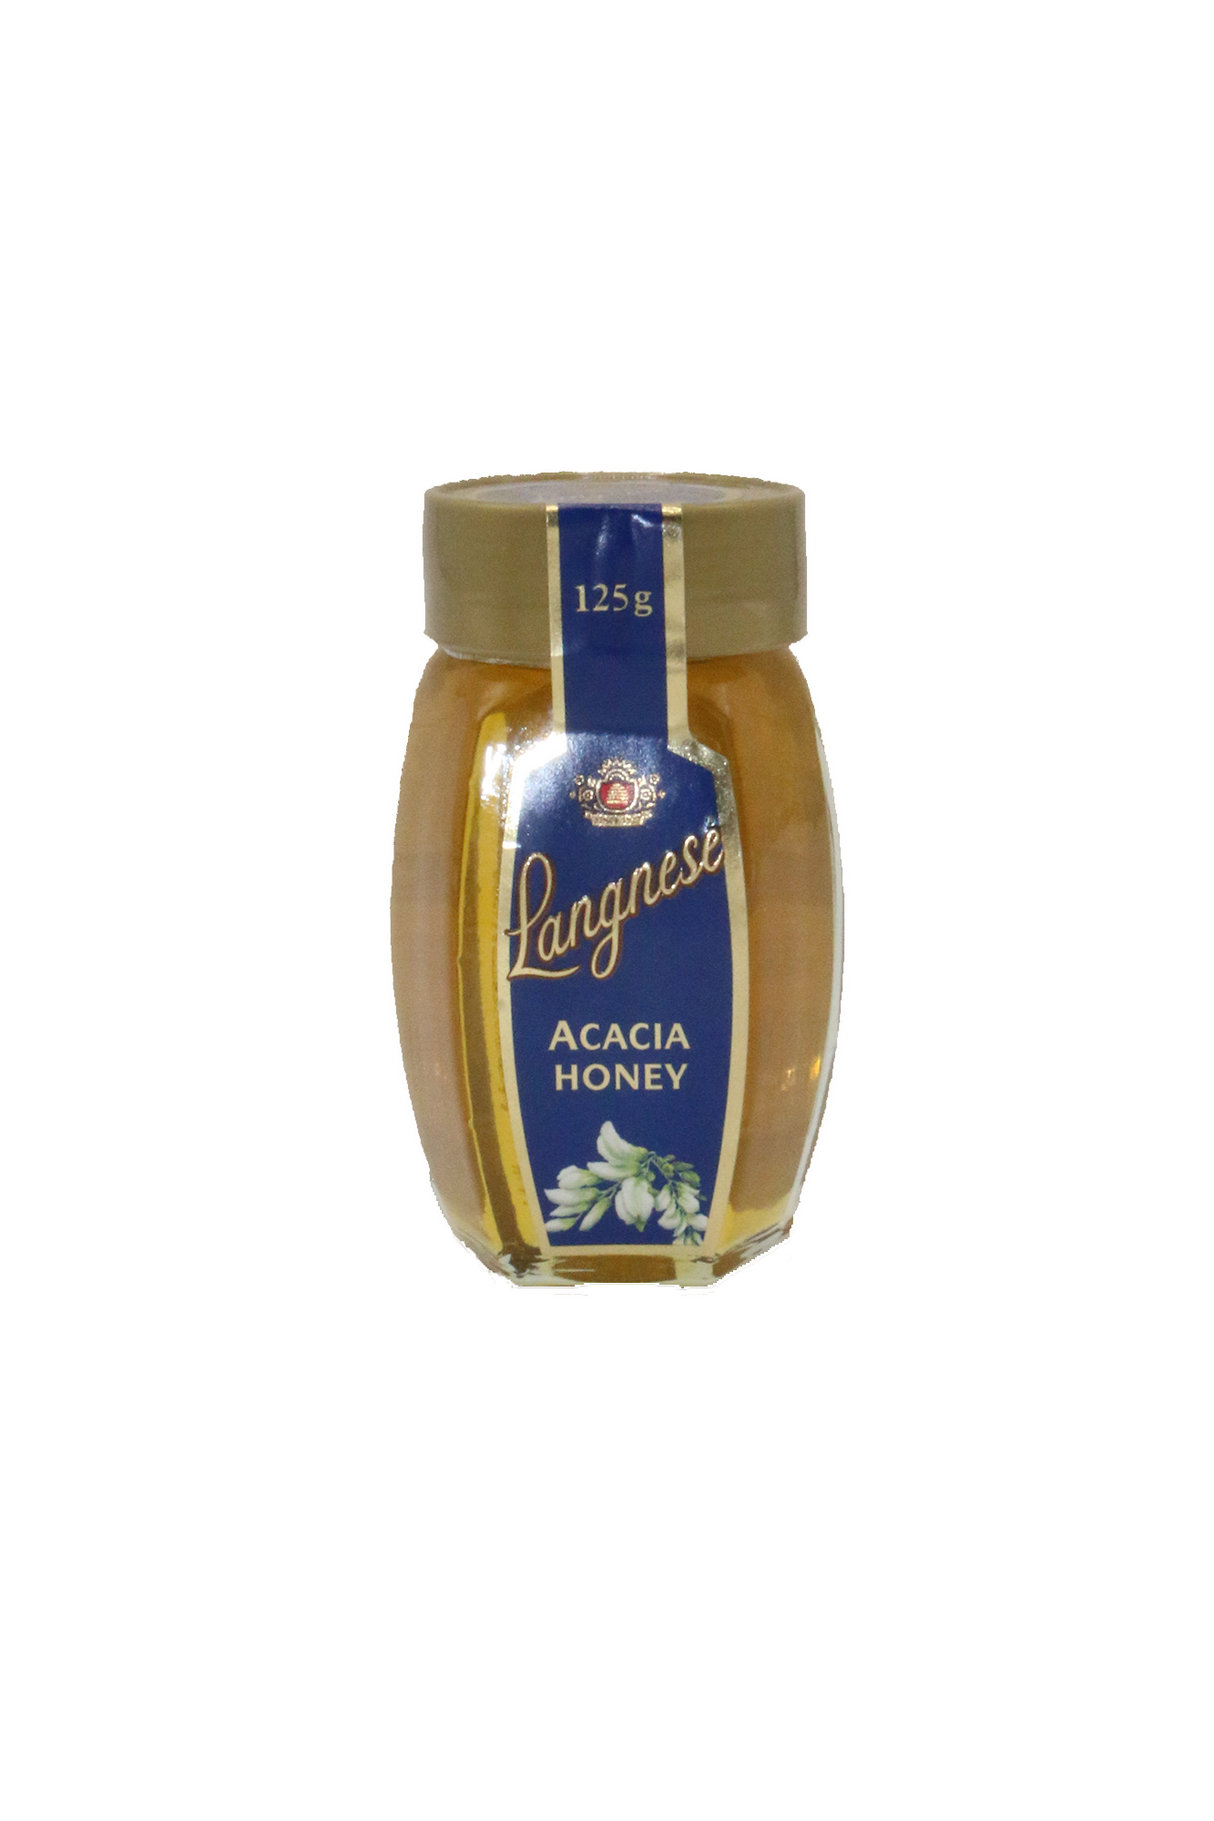 langnese honey acacia 125g